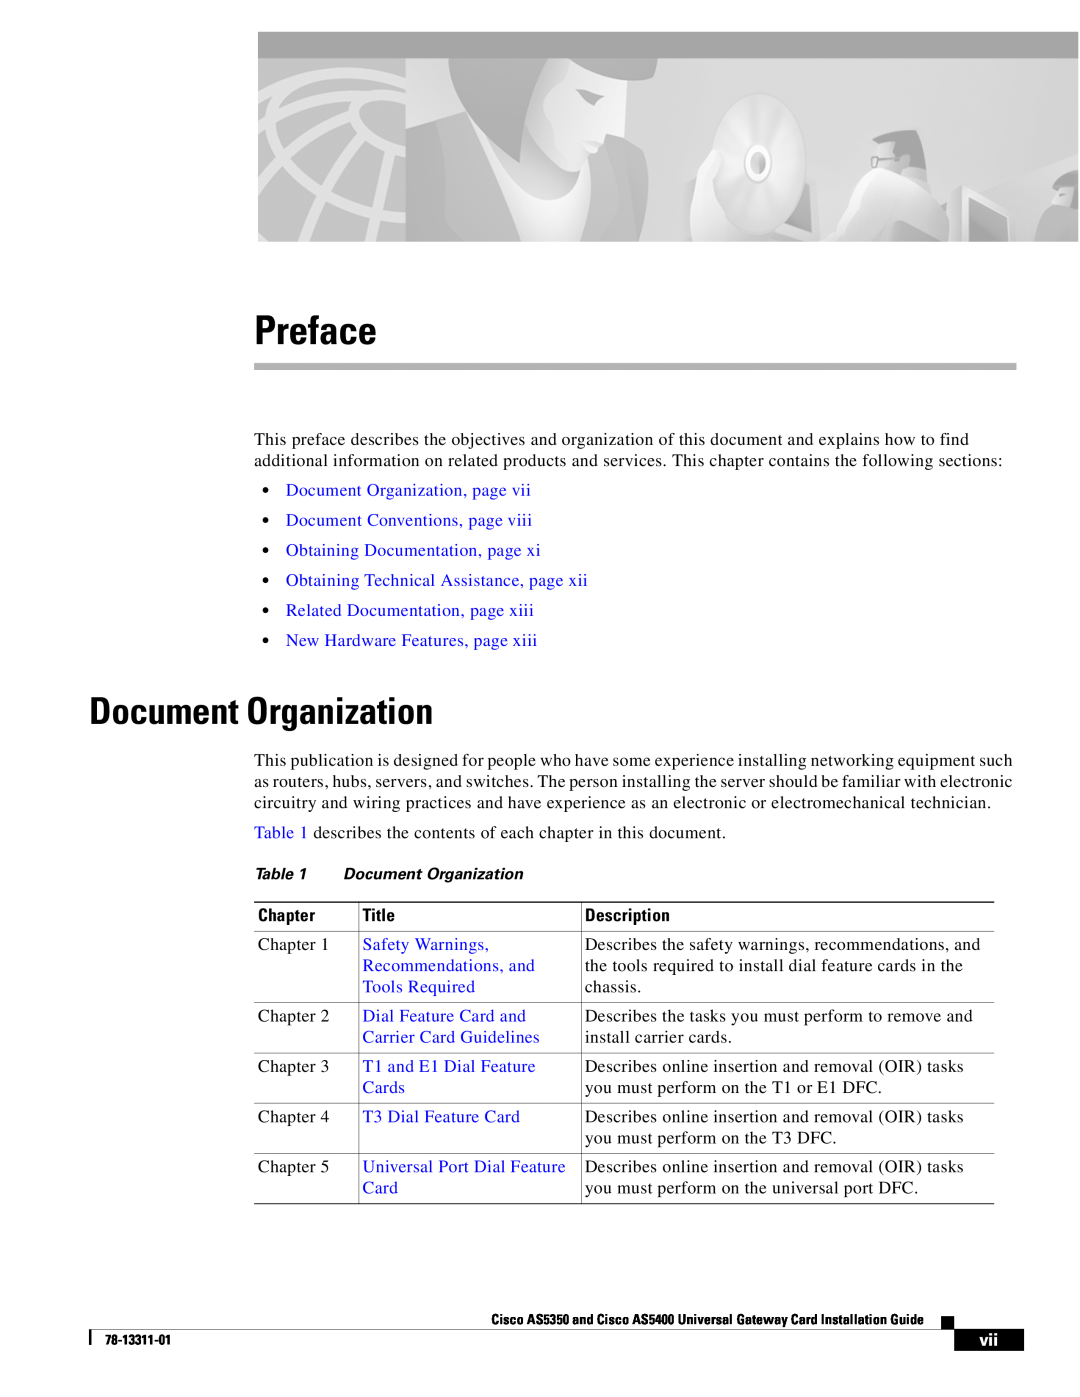 Cisco Systems AS5350 Preface, Document Organization, page Document Conventions, page, Chapter, Title, Description 